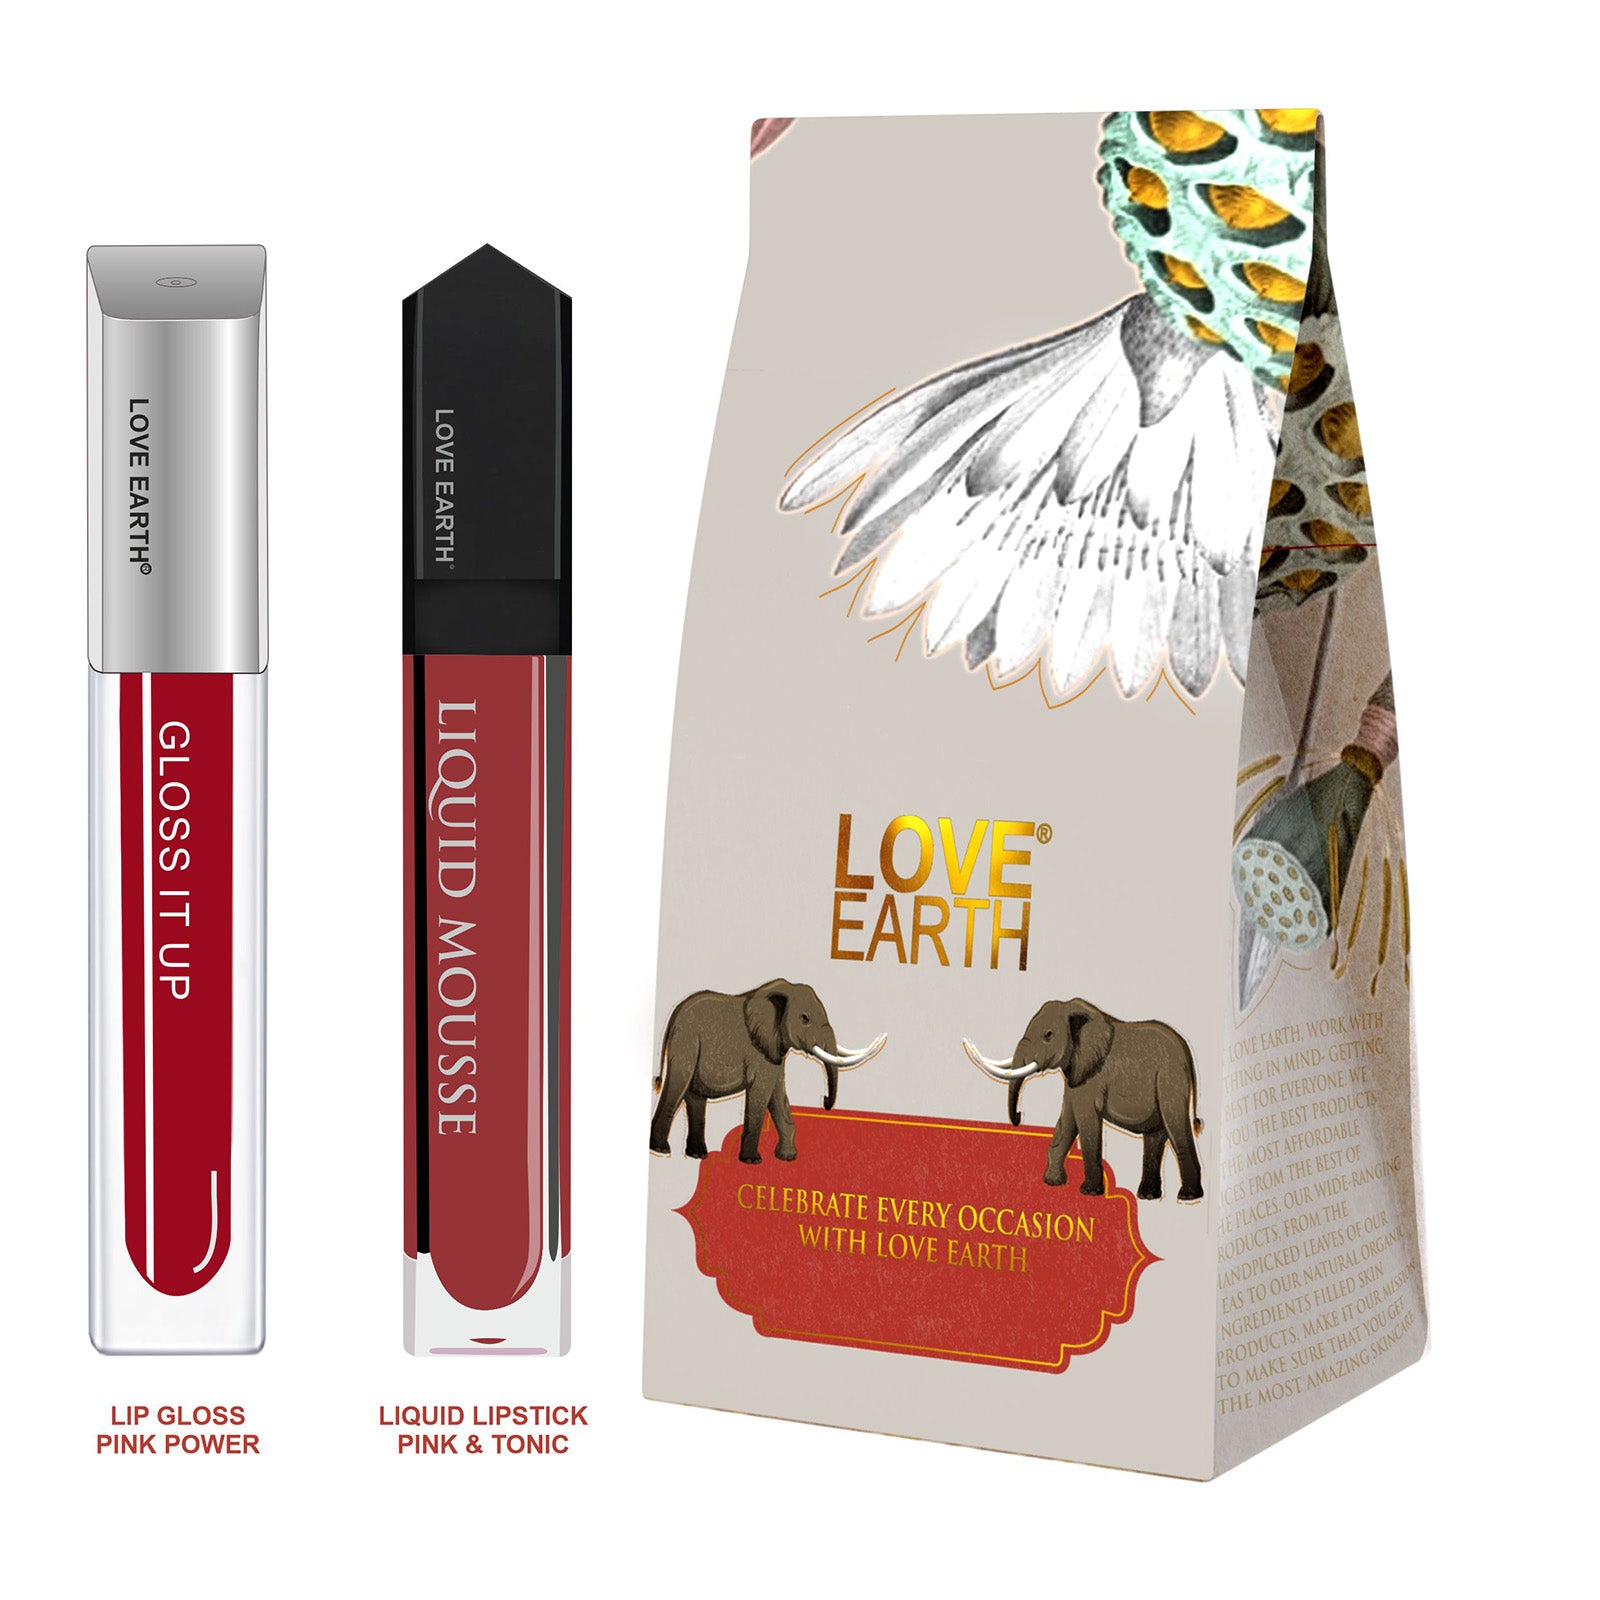 Liquid Lipstick Pink & Tonic & Lip Gloss Pink Power Gift Pack